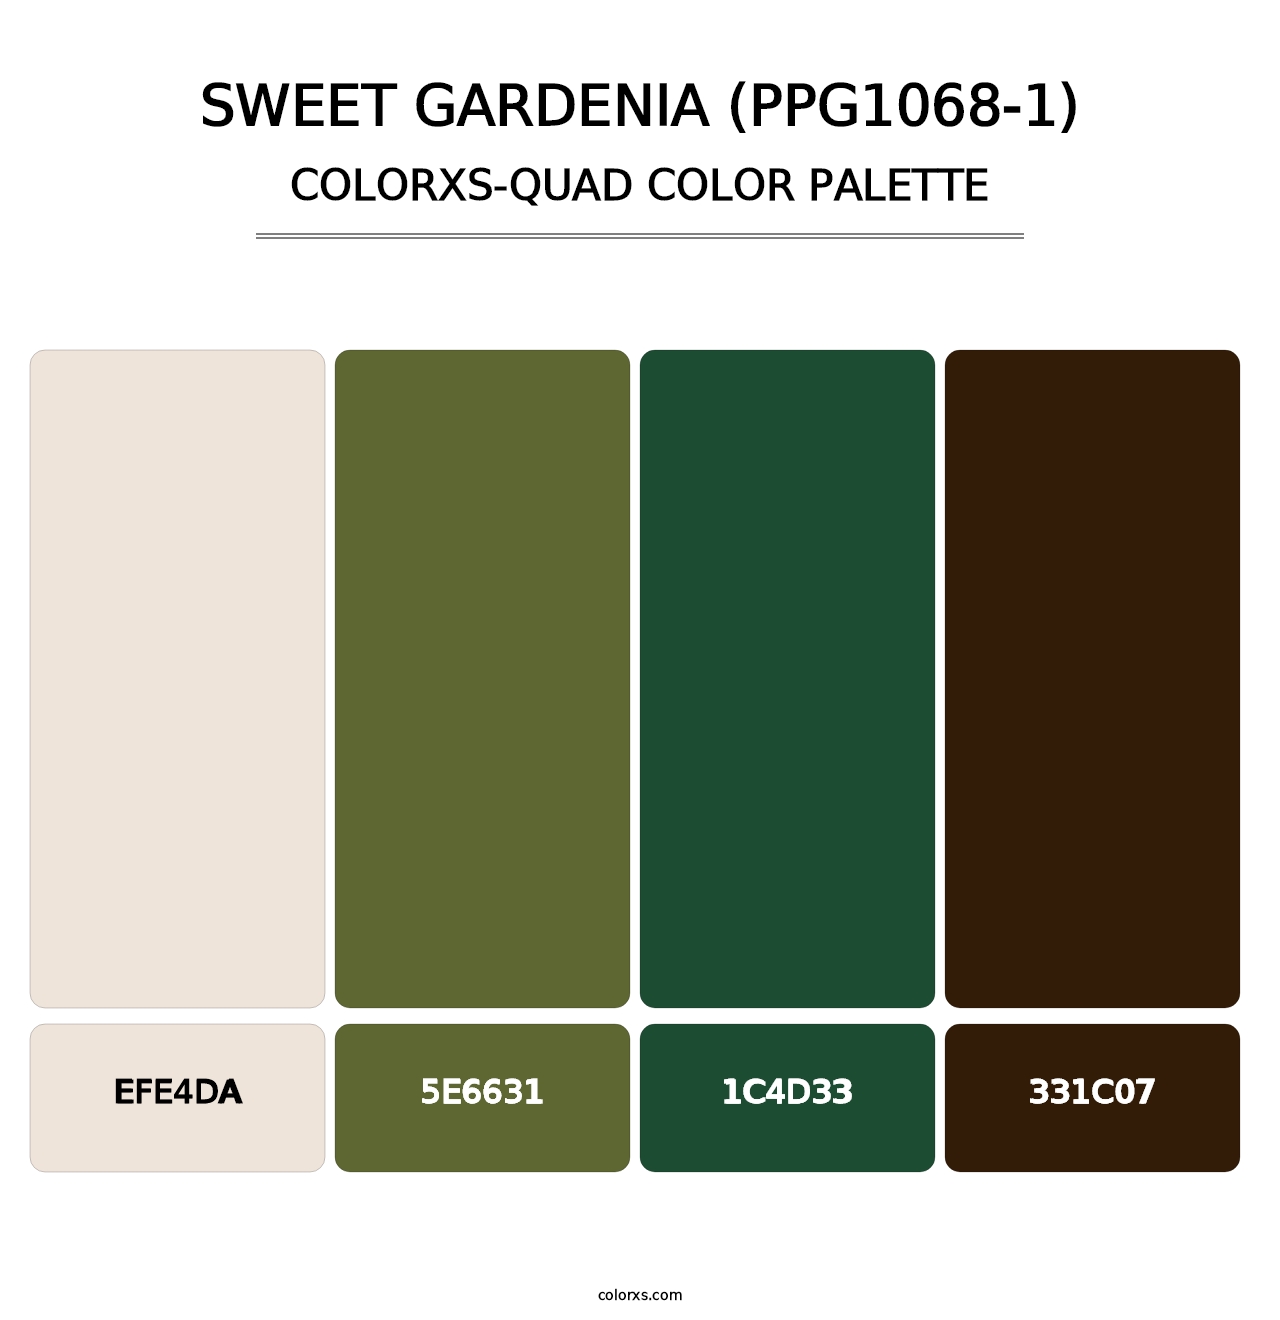 Sweet Gardenia (PPG1068-1) - Colorxs Quad Palette